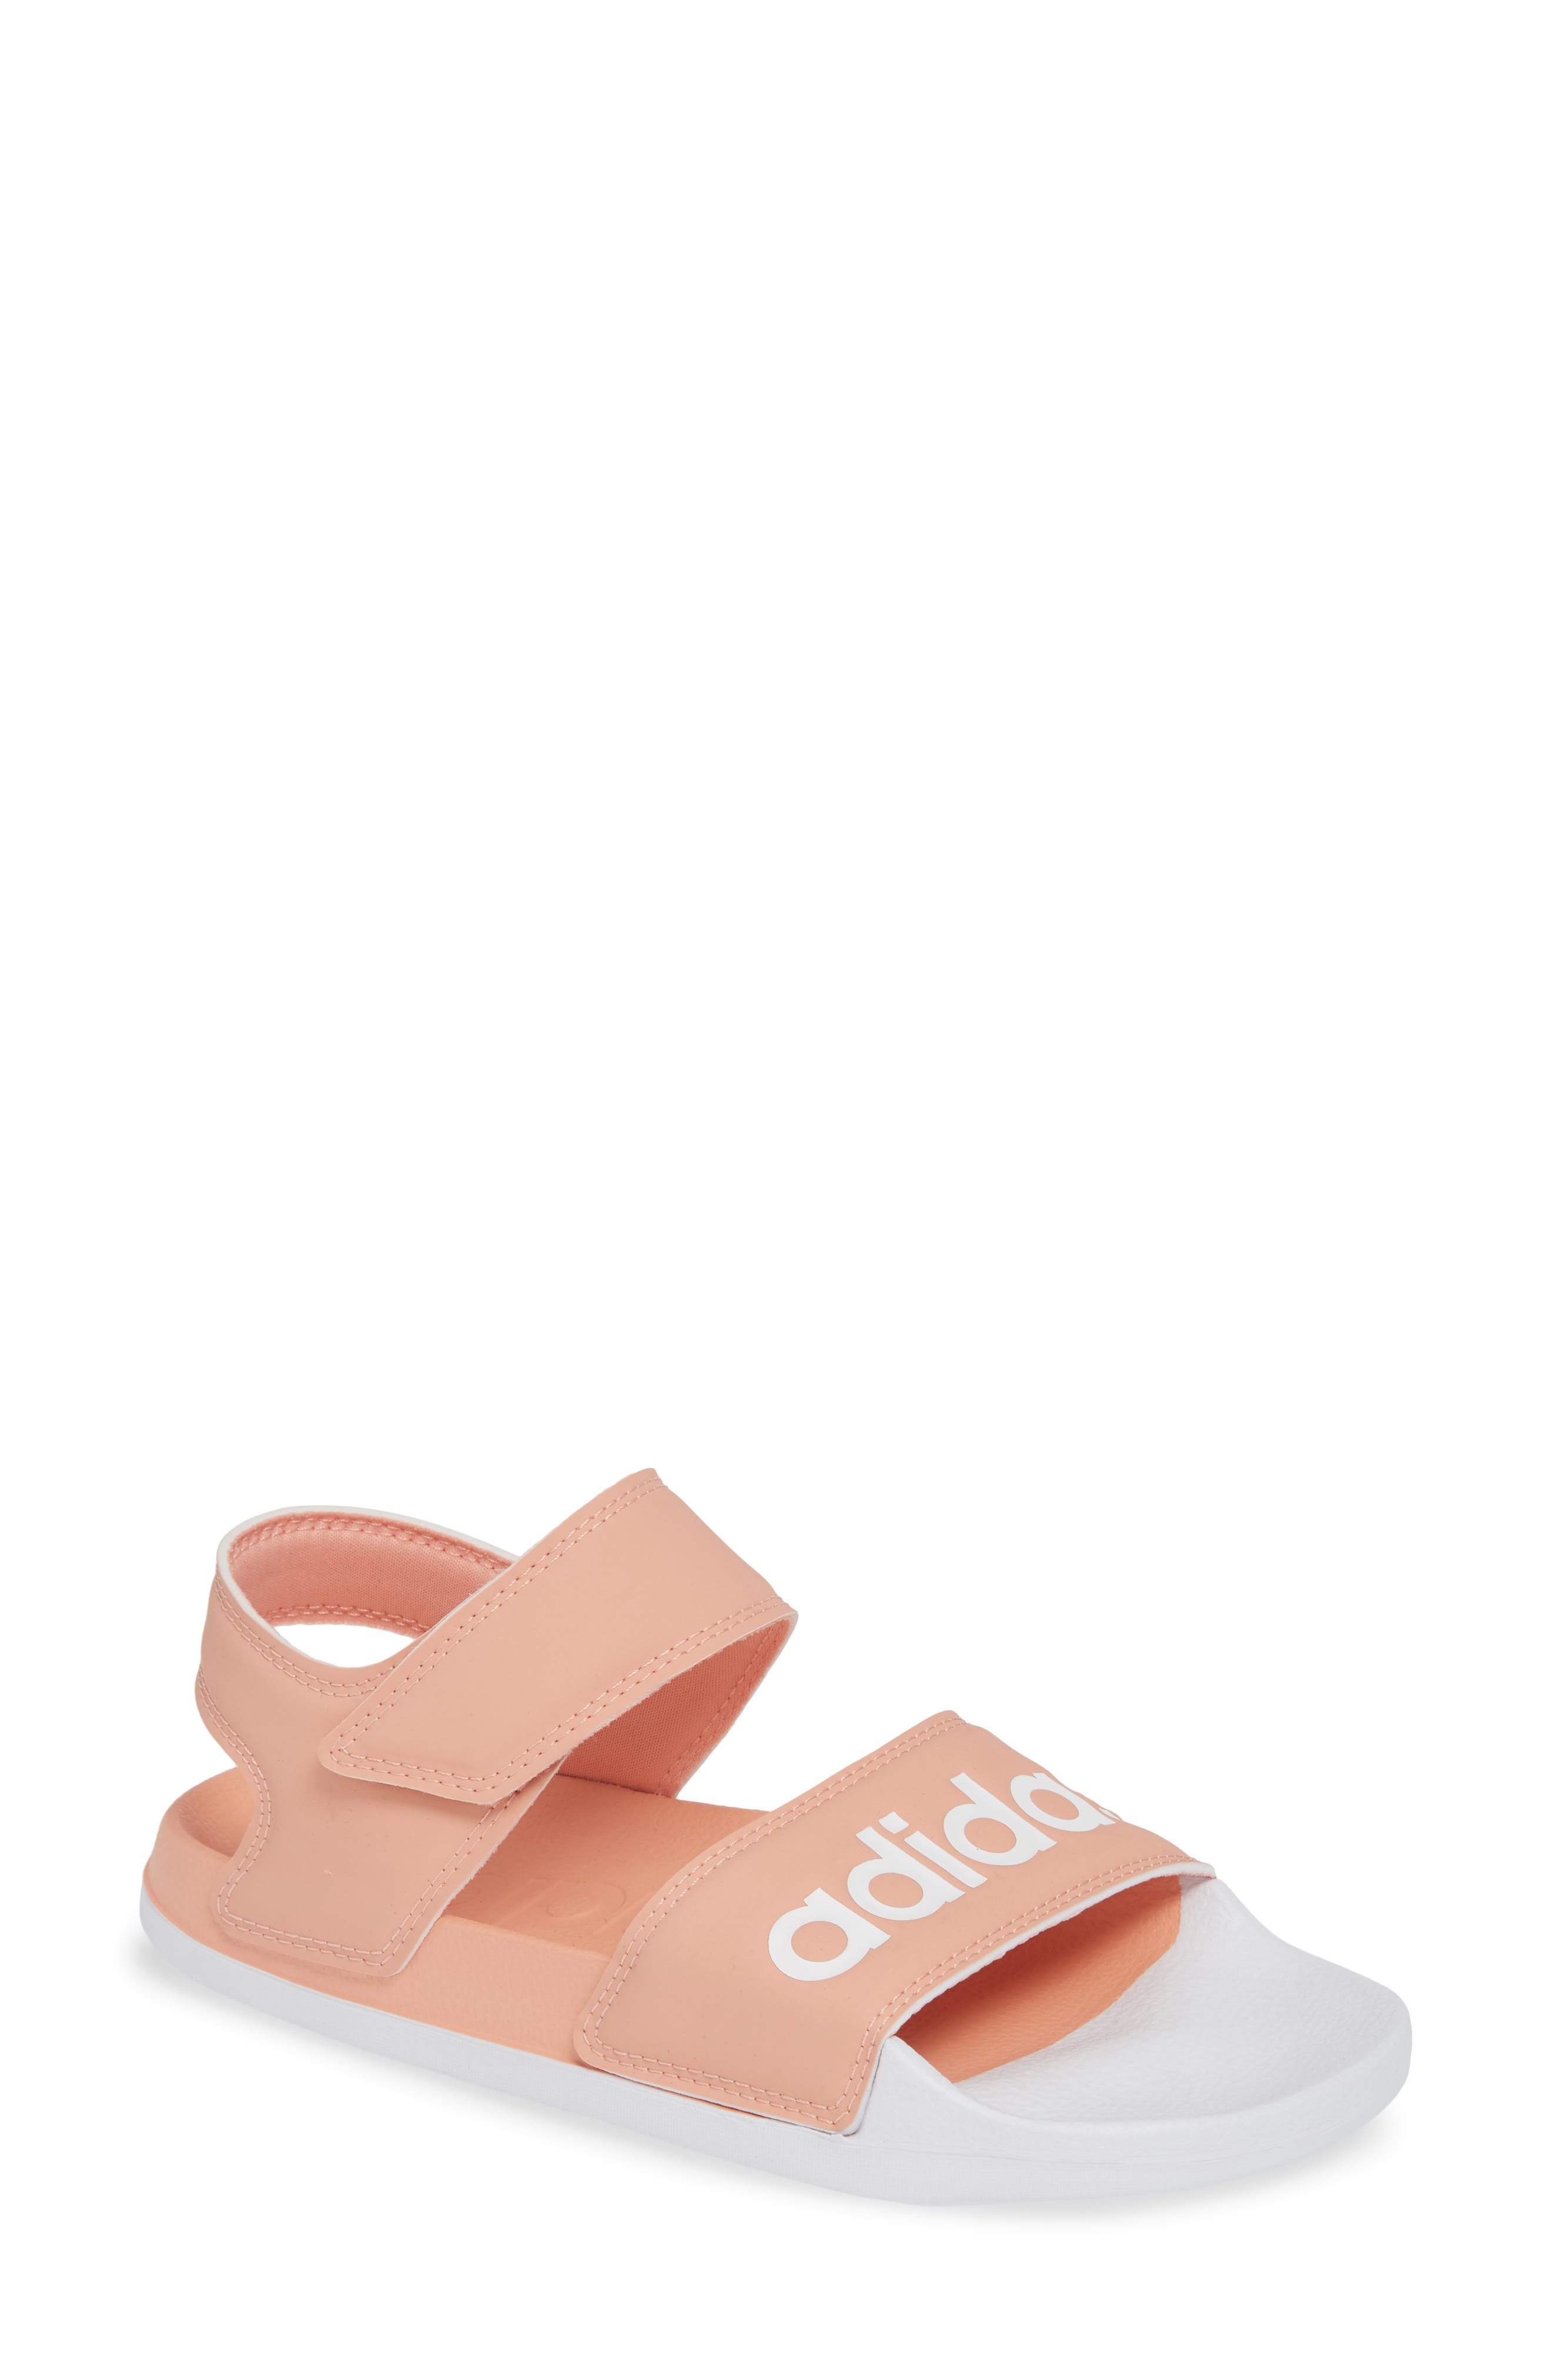 adidas sandals women pink